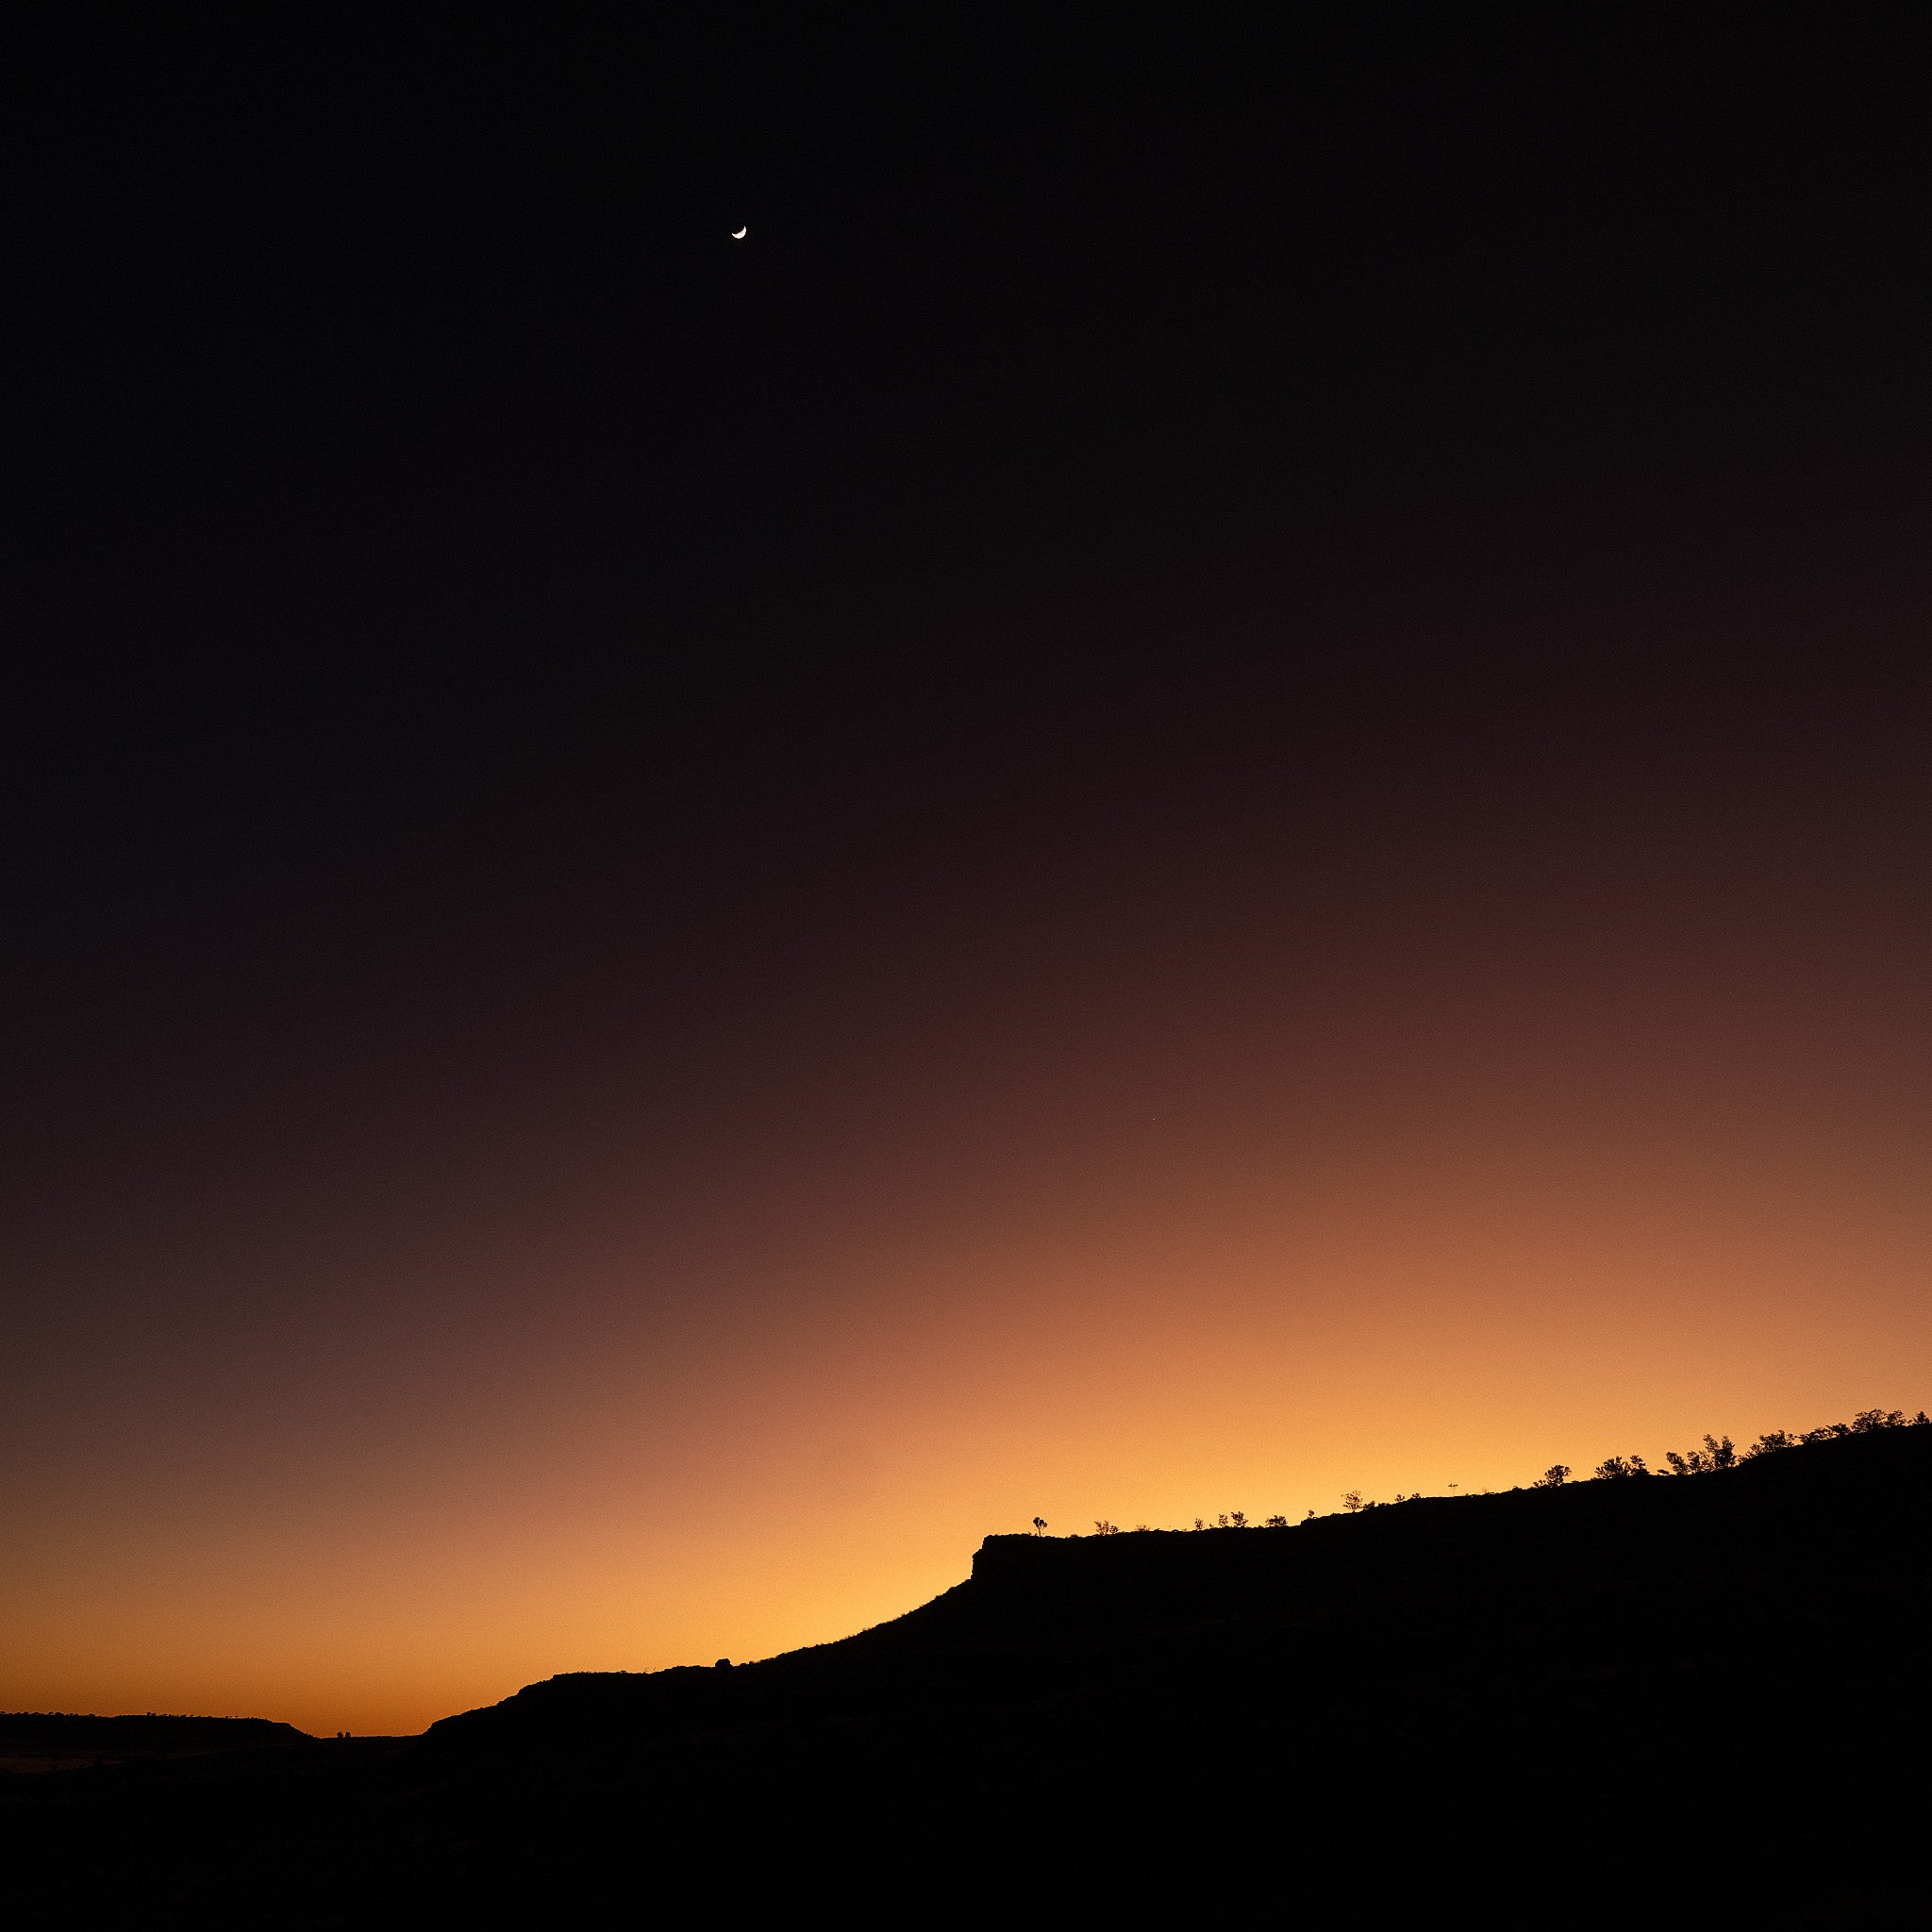 sunrise silhouette over Carawine Gorge